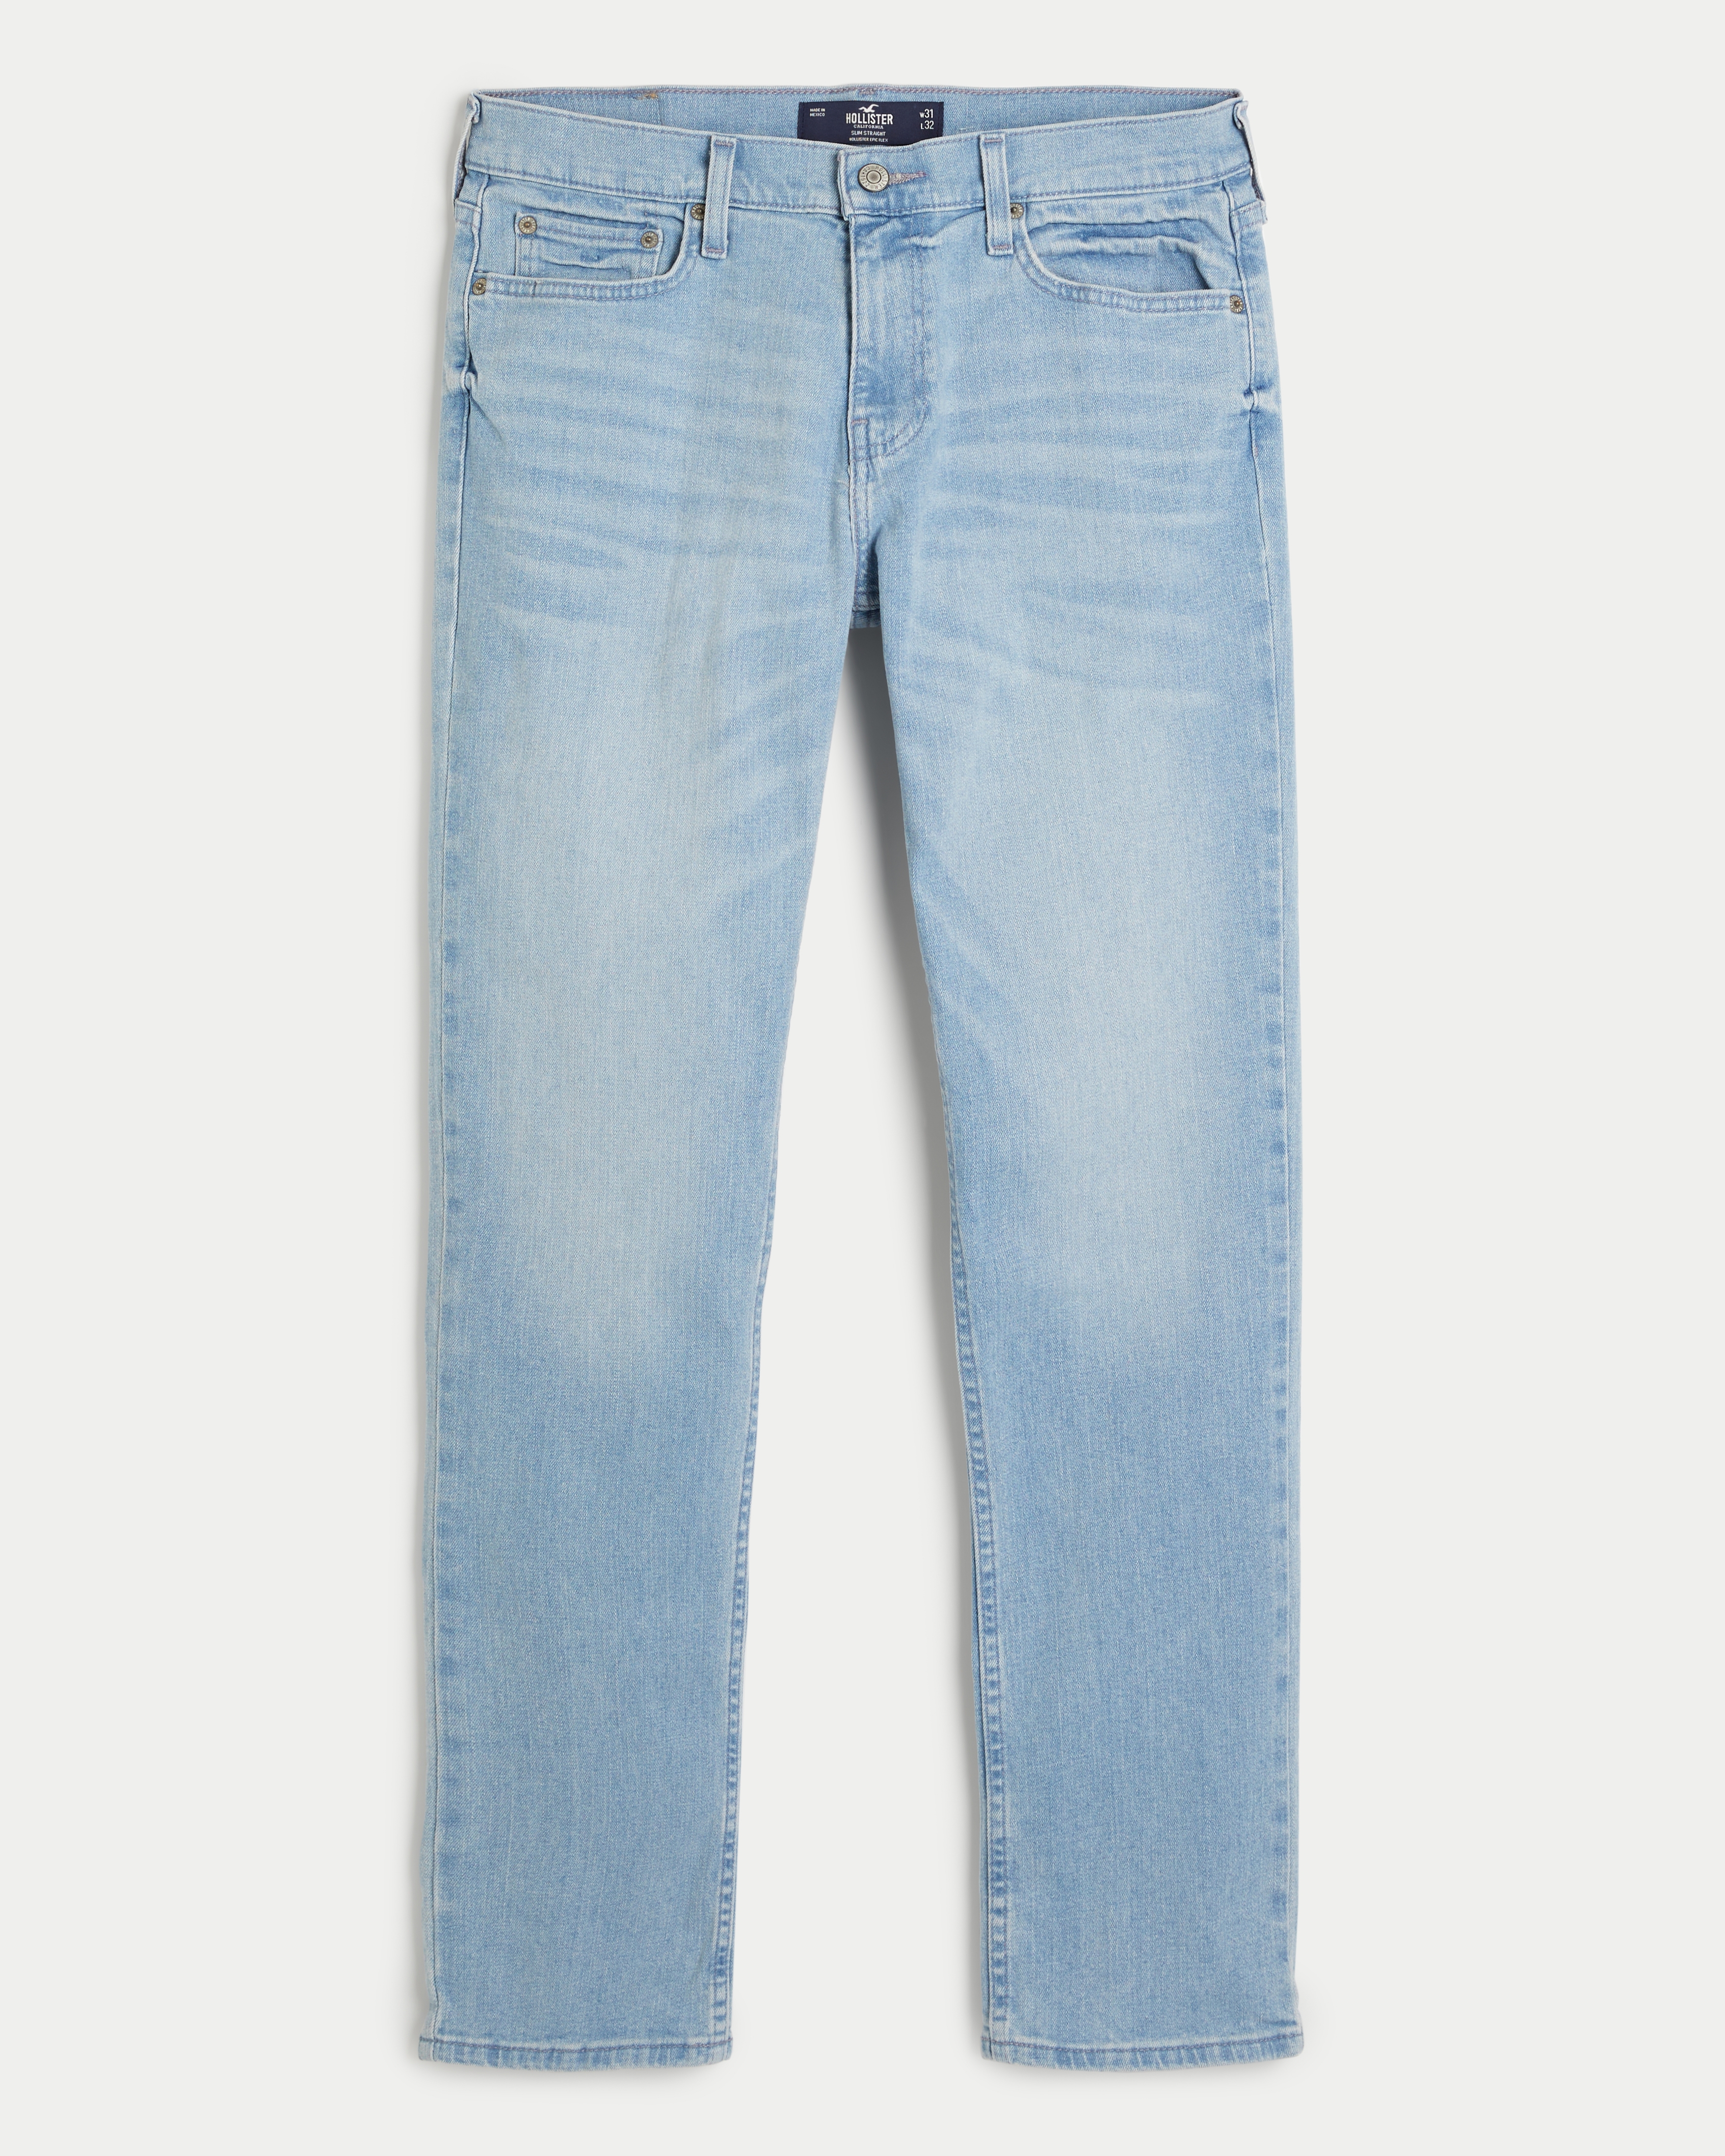 hollister jeans size 14